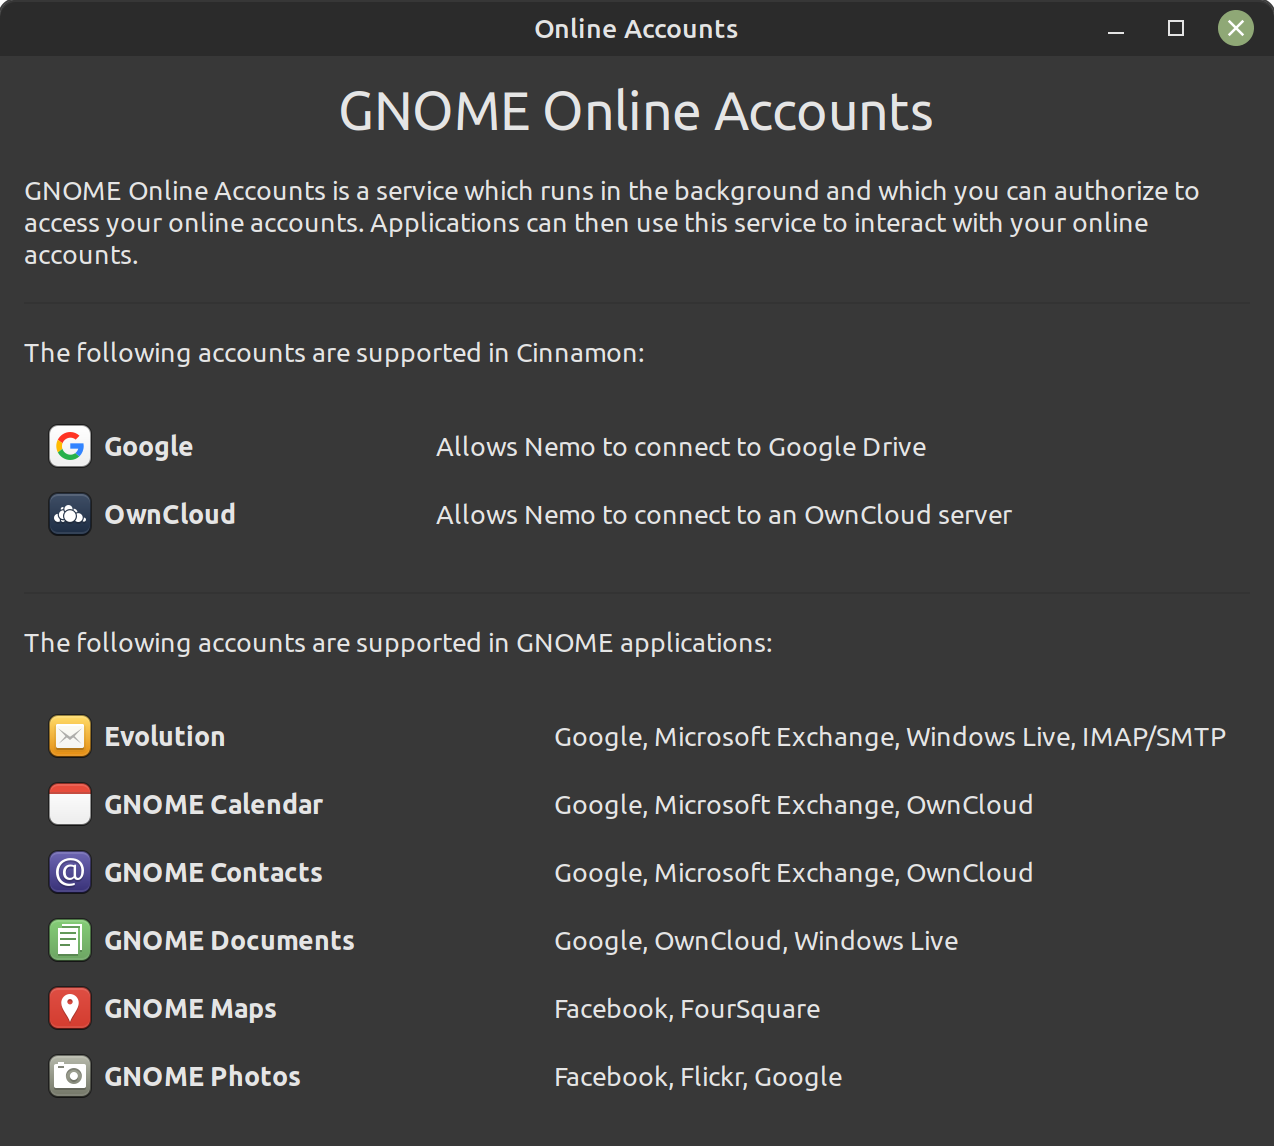 GNOME Online accounts in Cinnamon